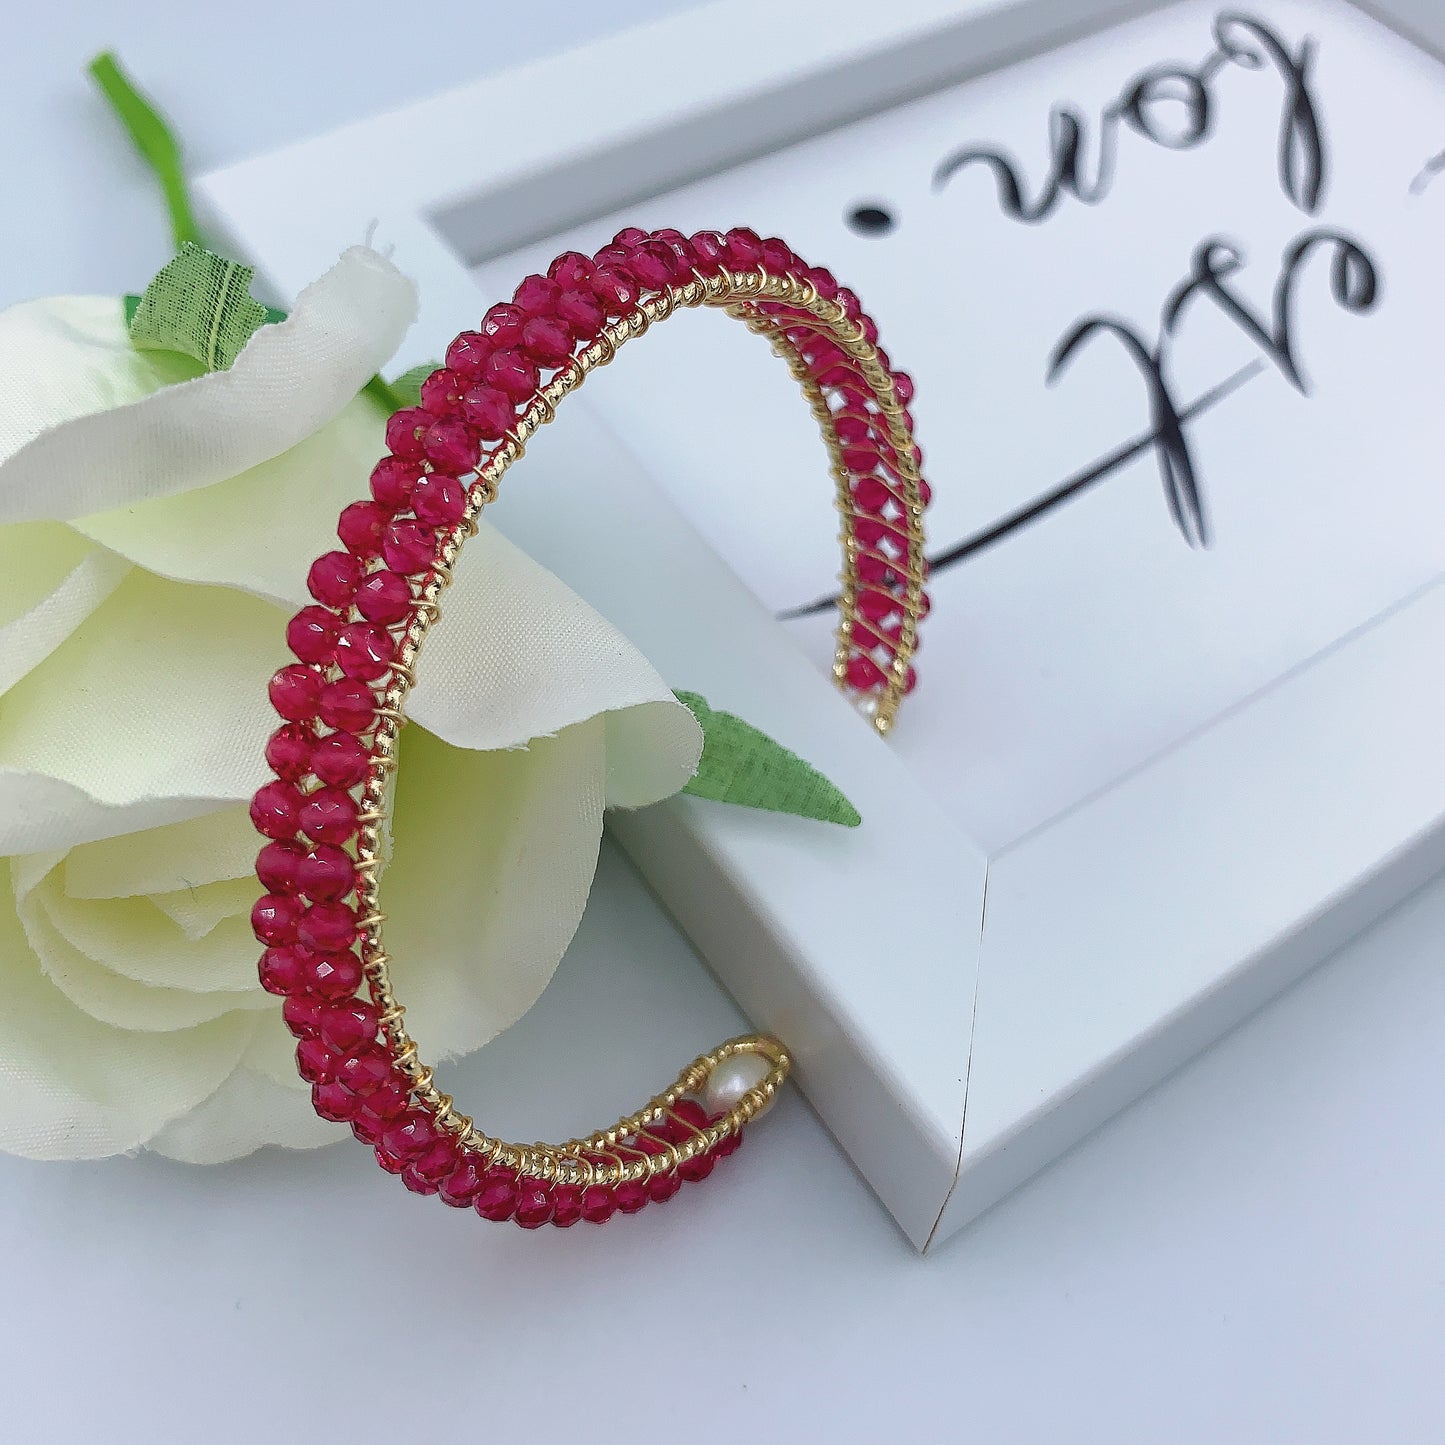 Women's Fashion Beads Gemstone Bangle